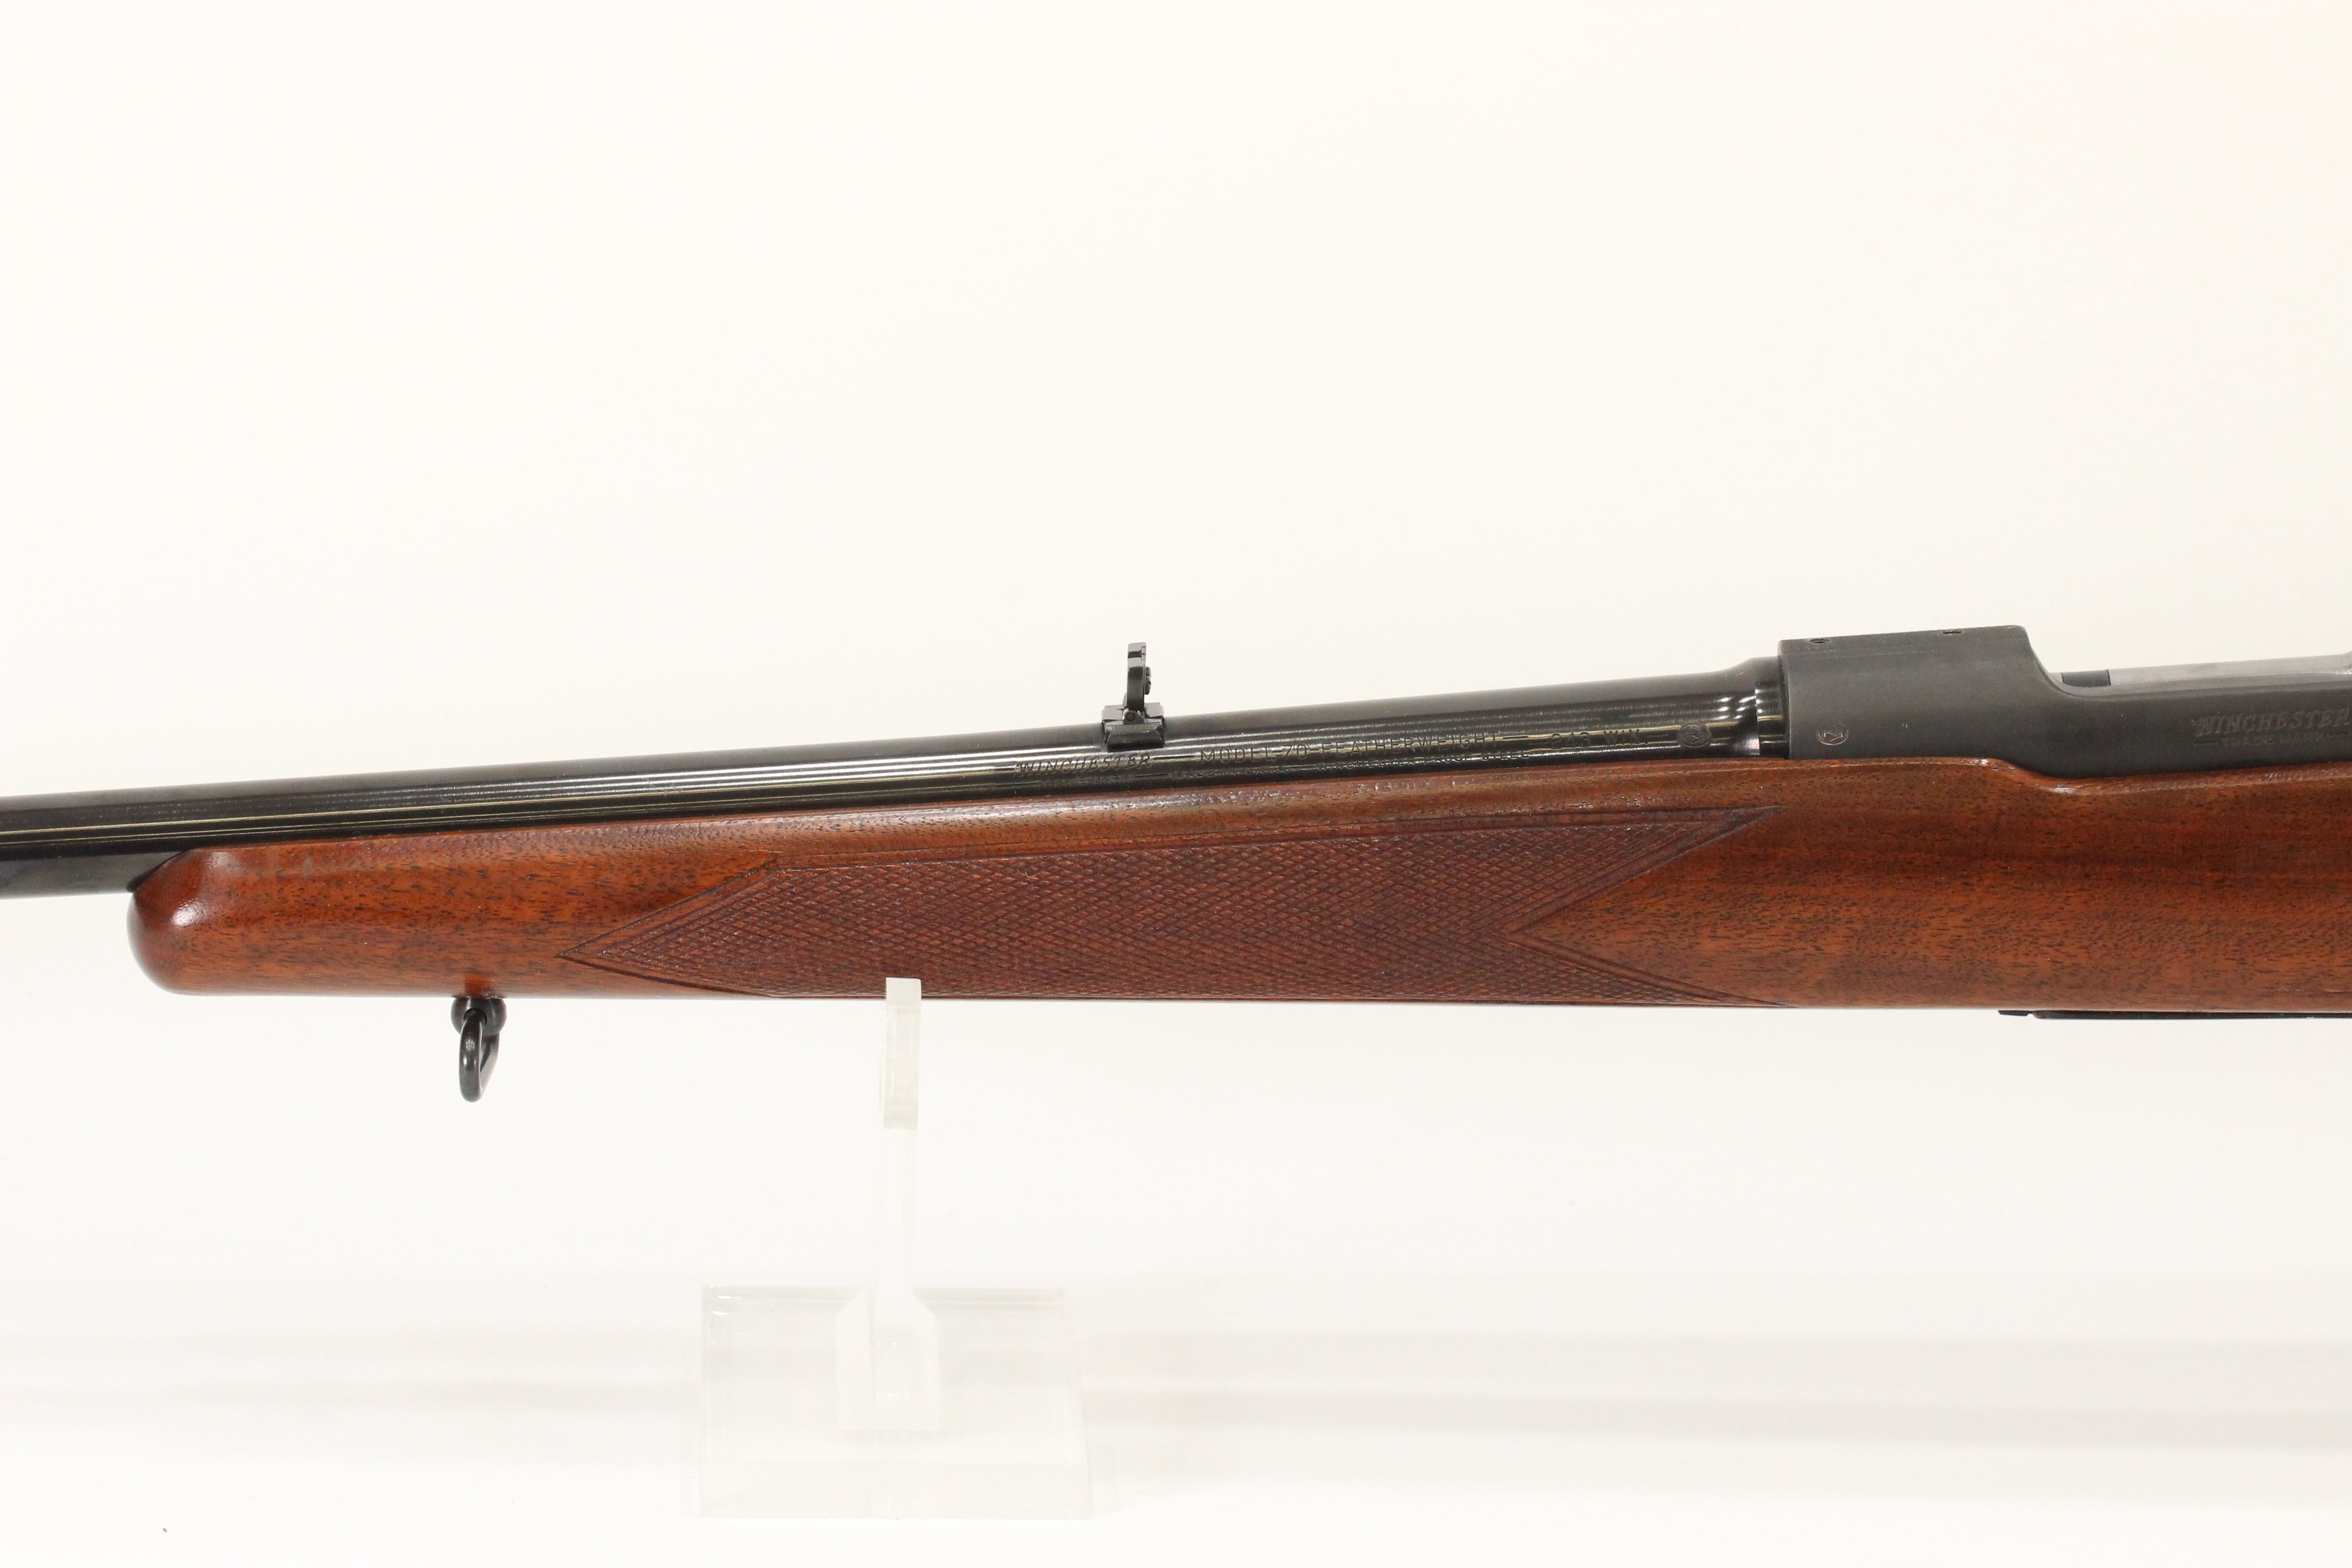 .243 Featherweight Rifle - 1956